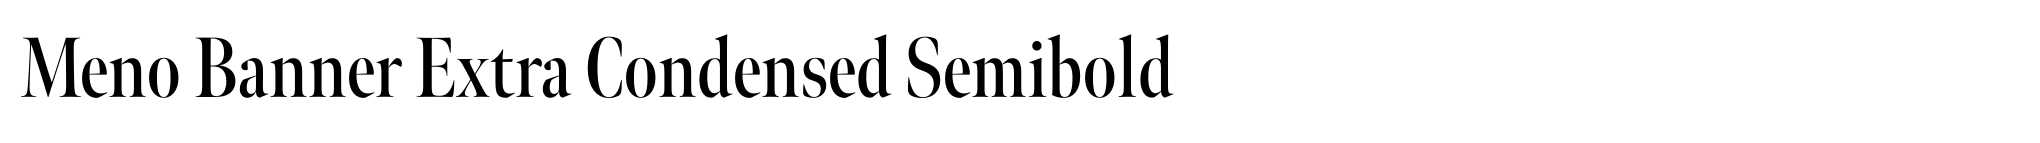 Meno Banner Extra Condensed Semibold image